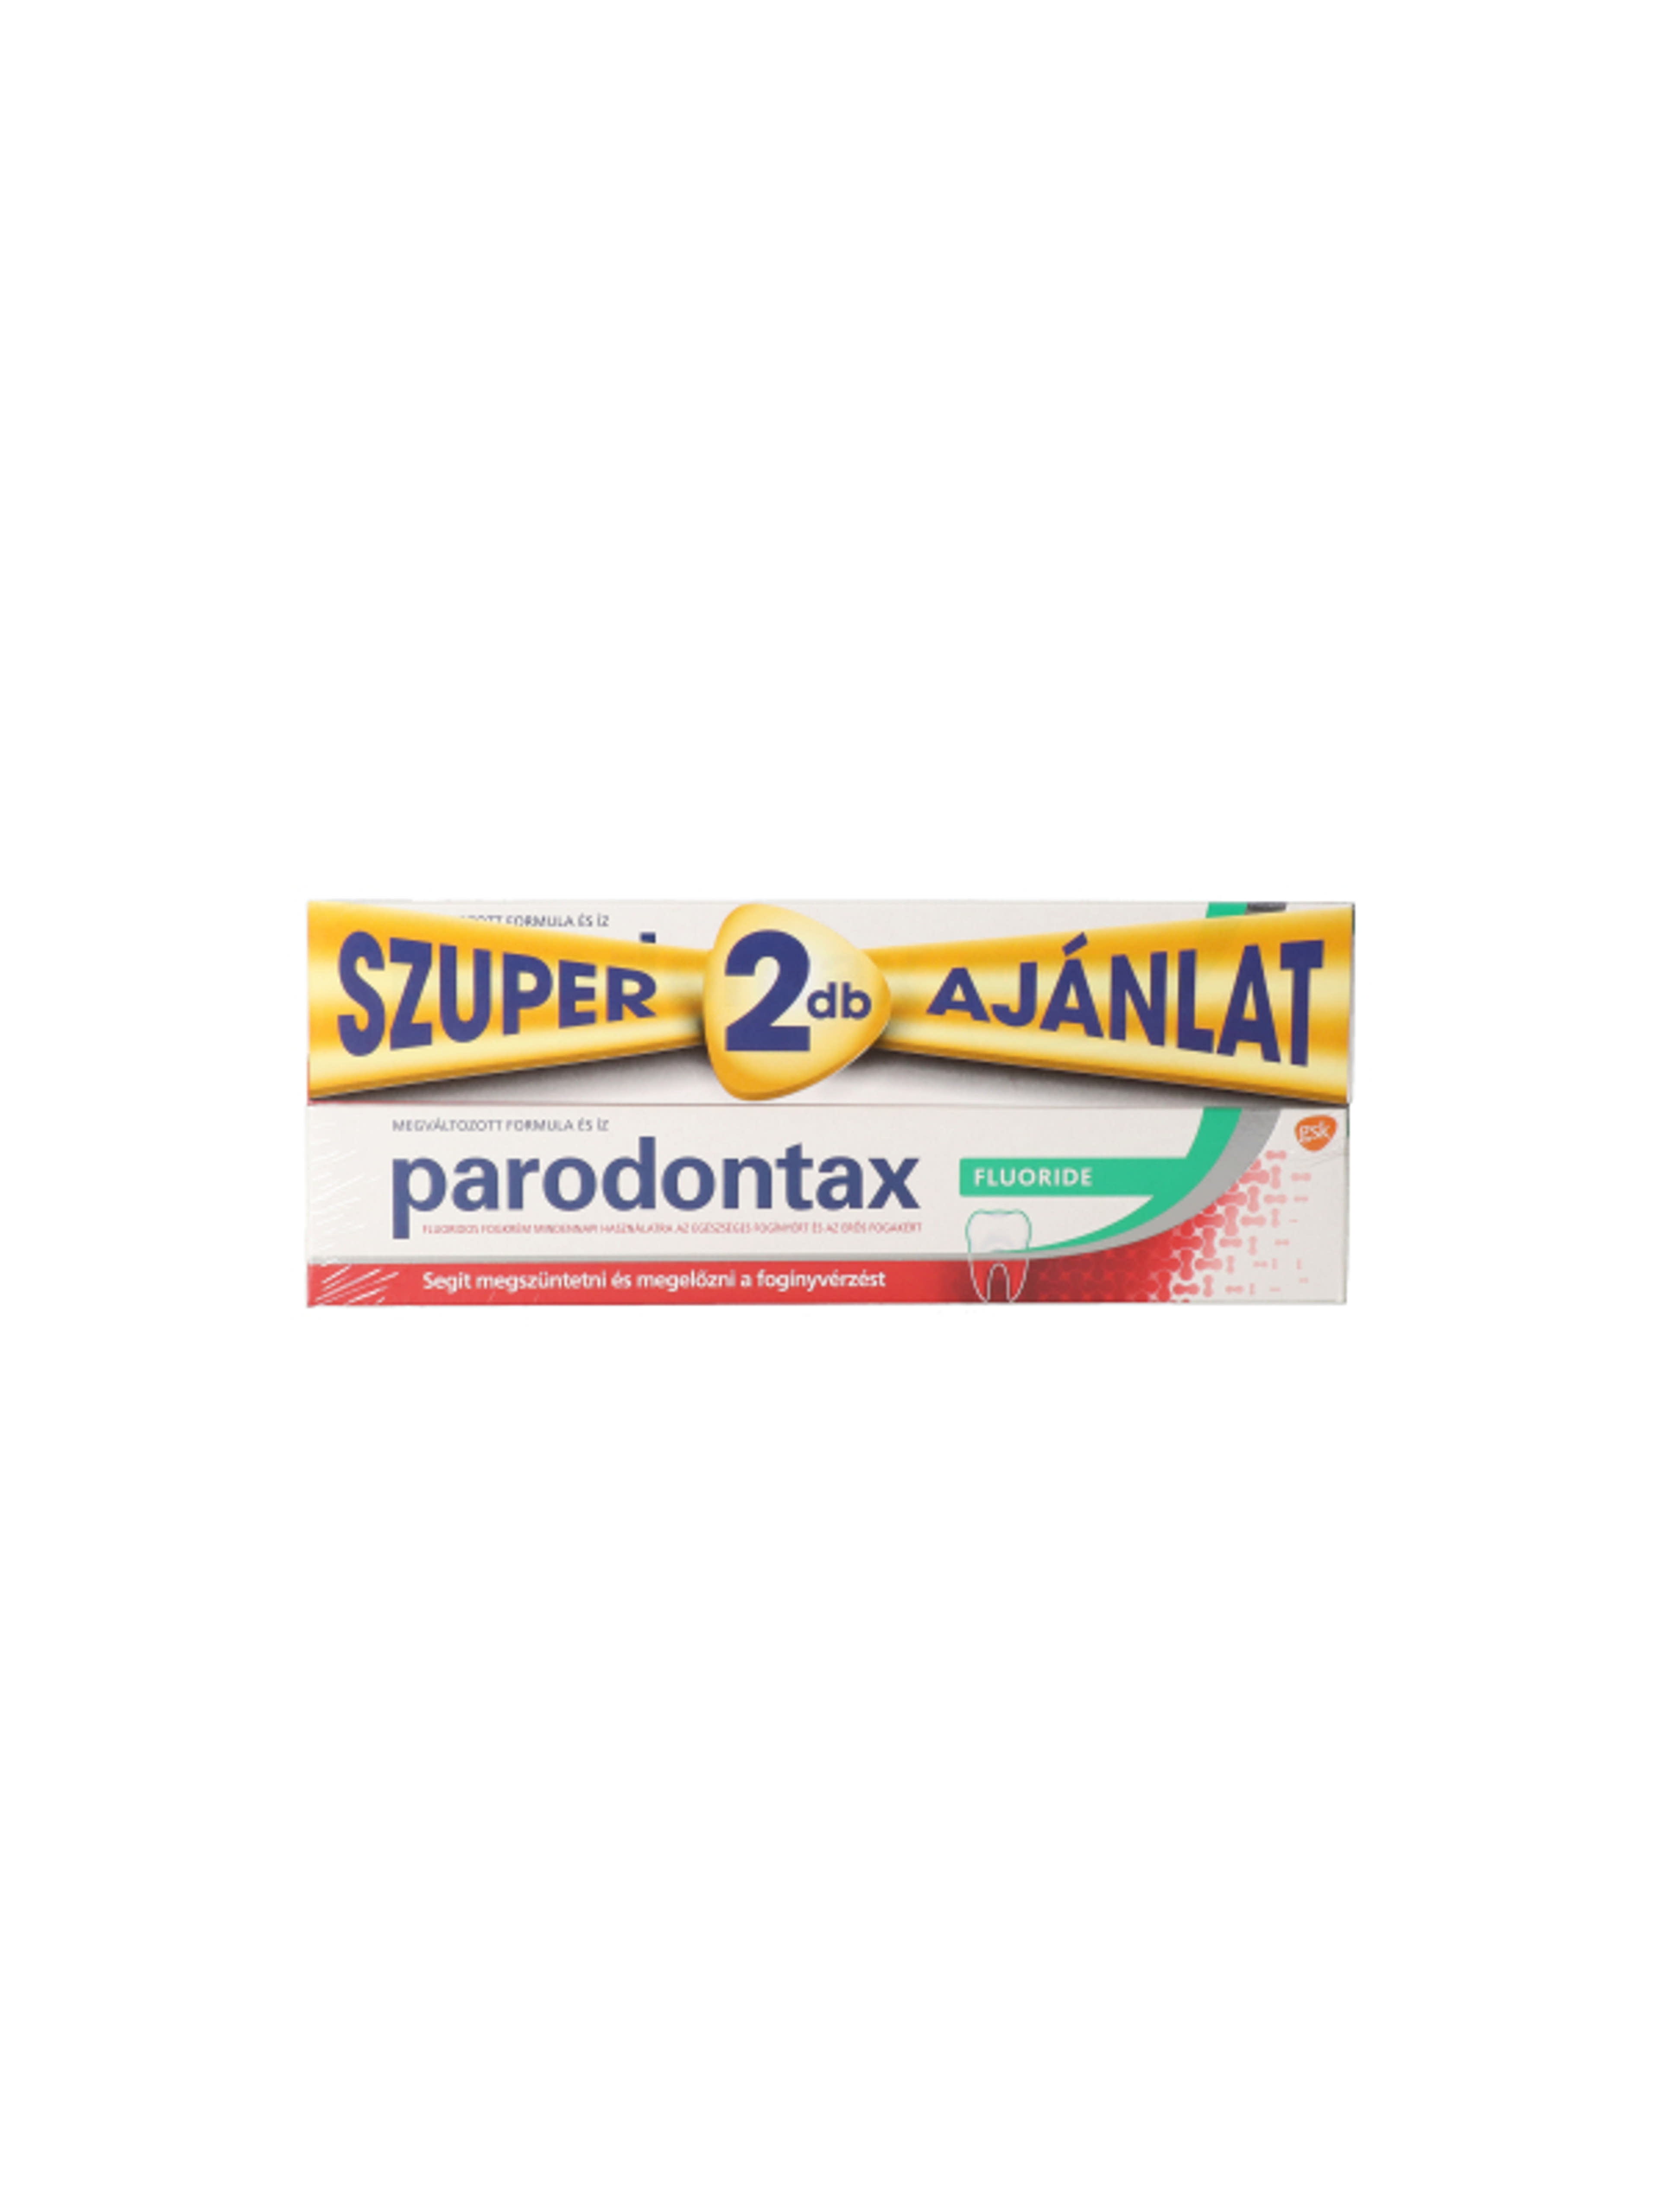 Parodontax Fluoride fogkrém duopack 2 x 75 ml - 150 ml-3